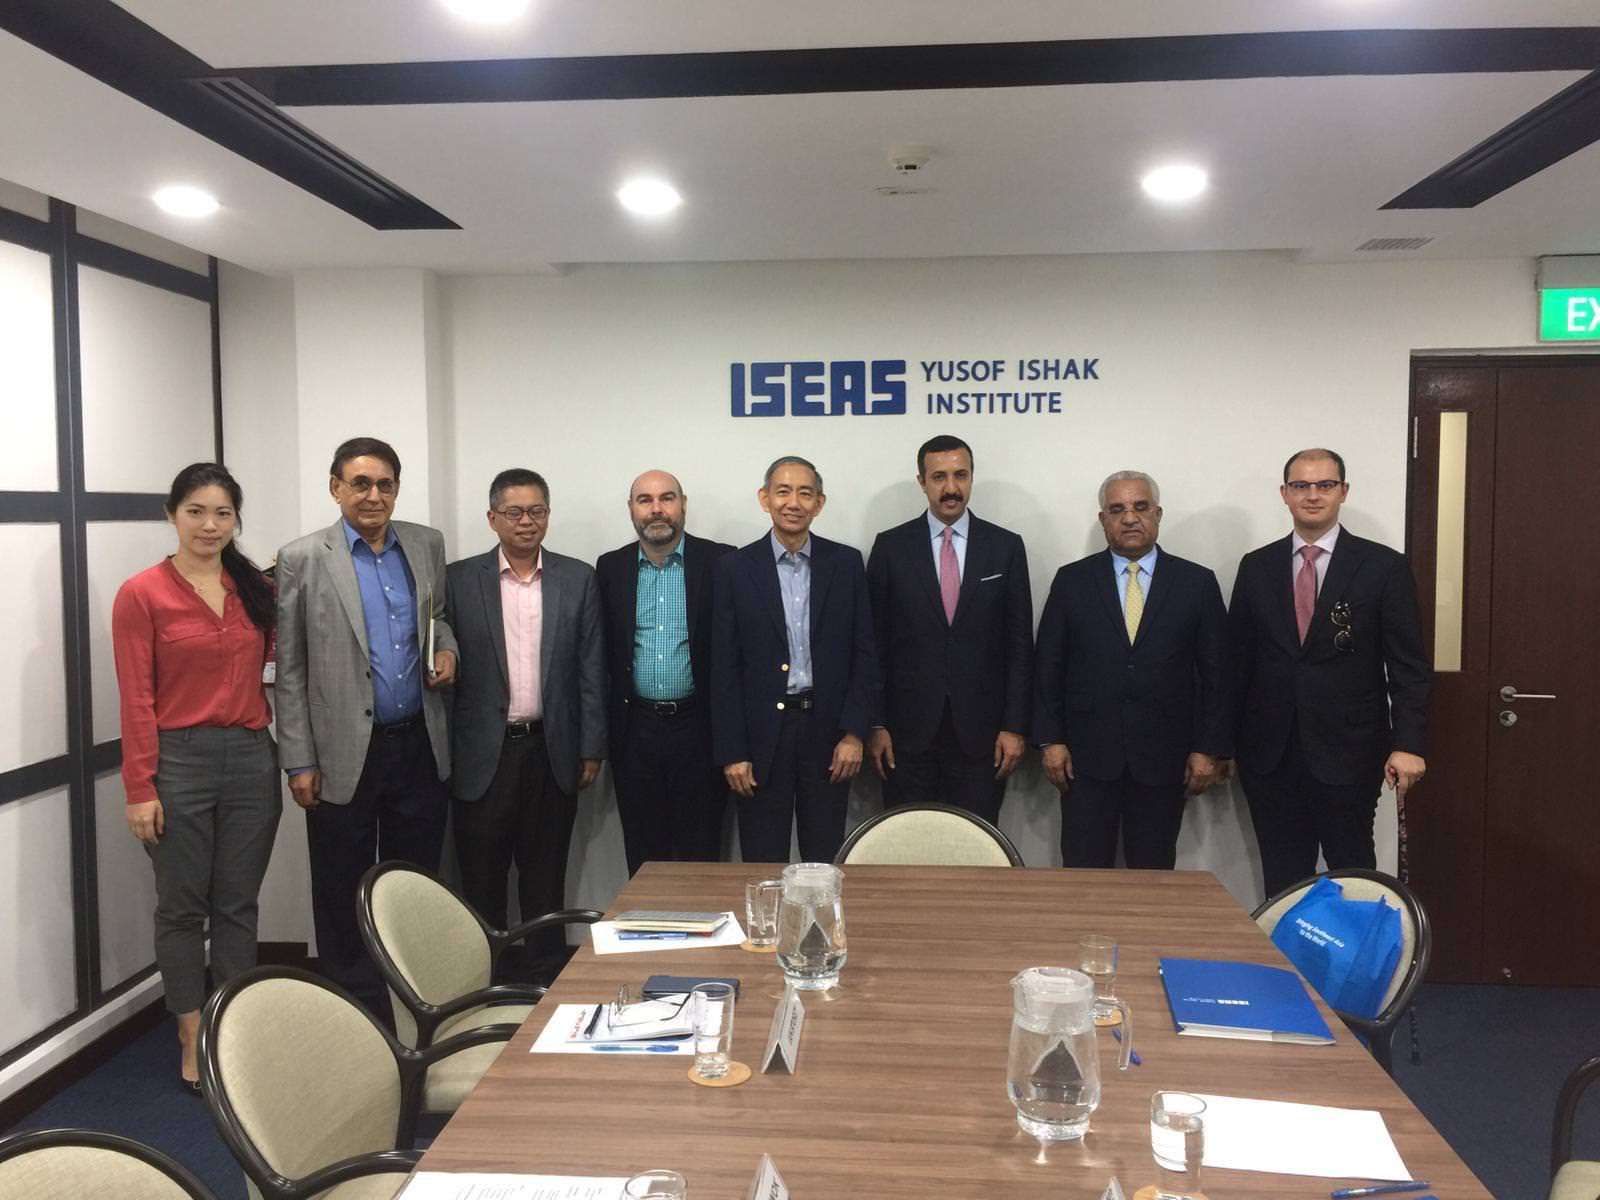 Derasat in Talks with the Yusof Ishaq Institute (ISEAS)